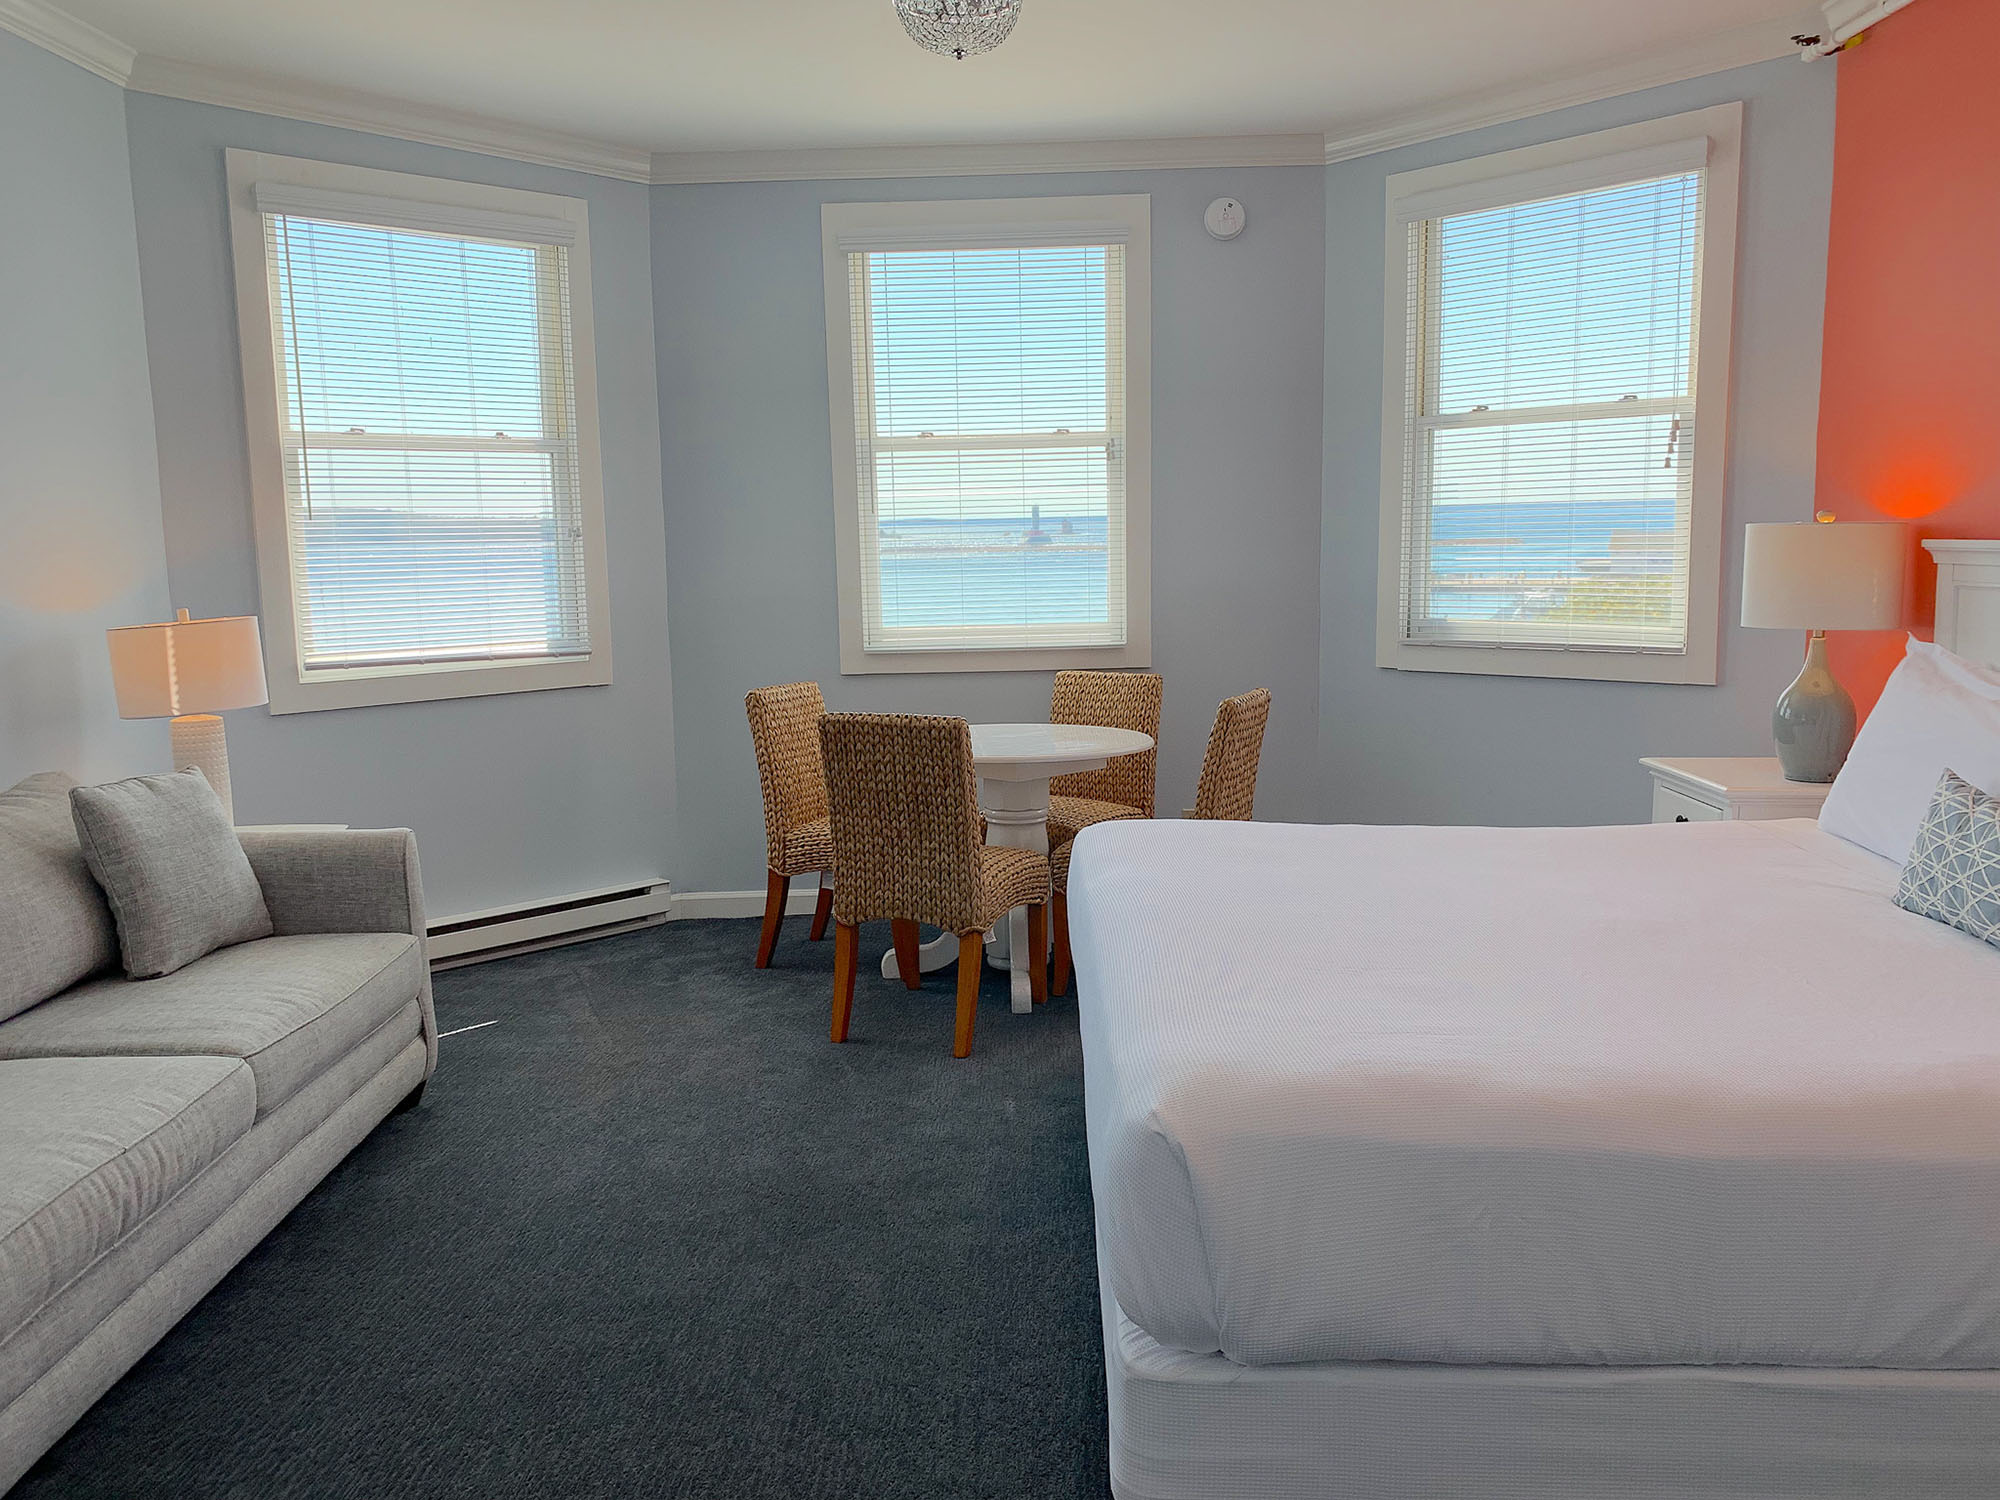 Premium View King Room with sofa at the Island House Hotel on Mackinac Island, MI